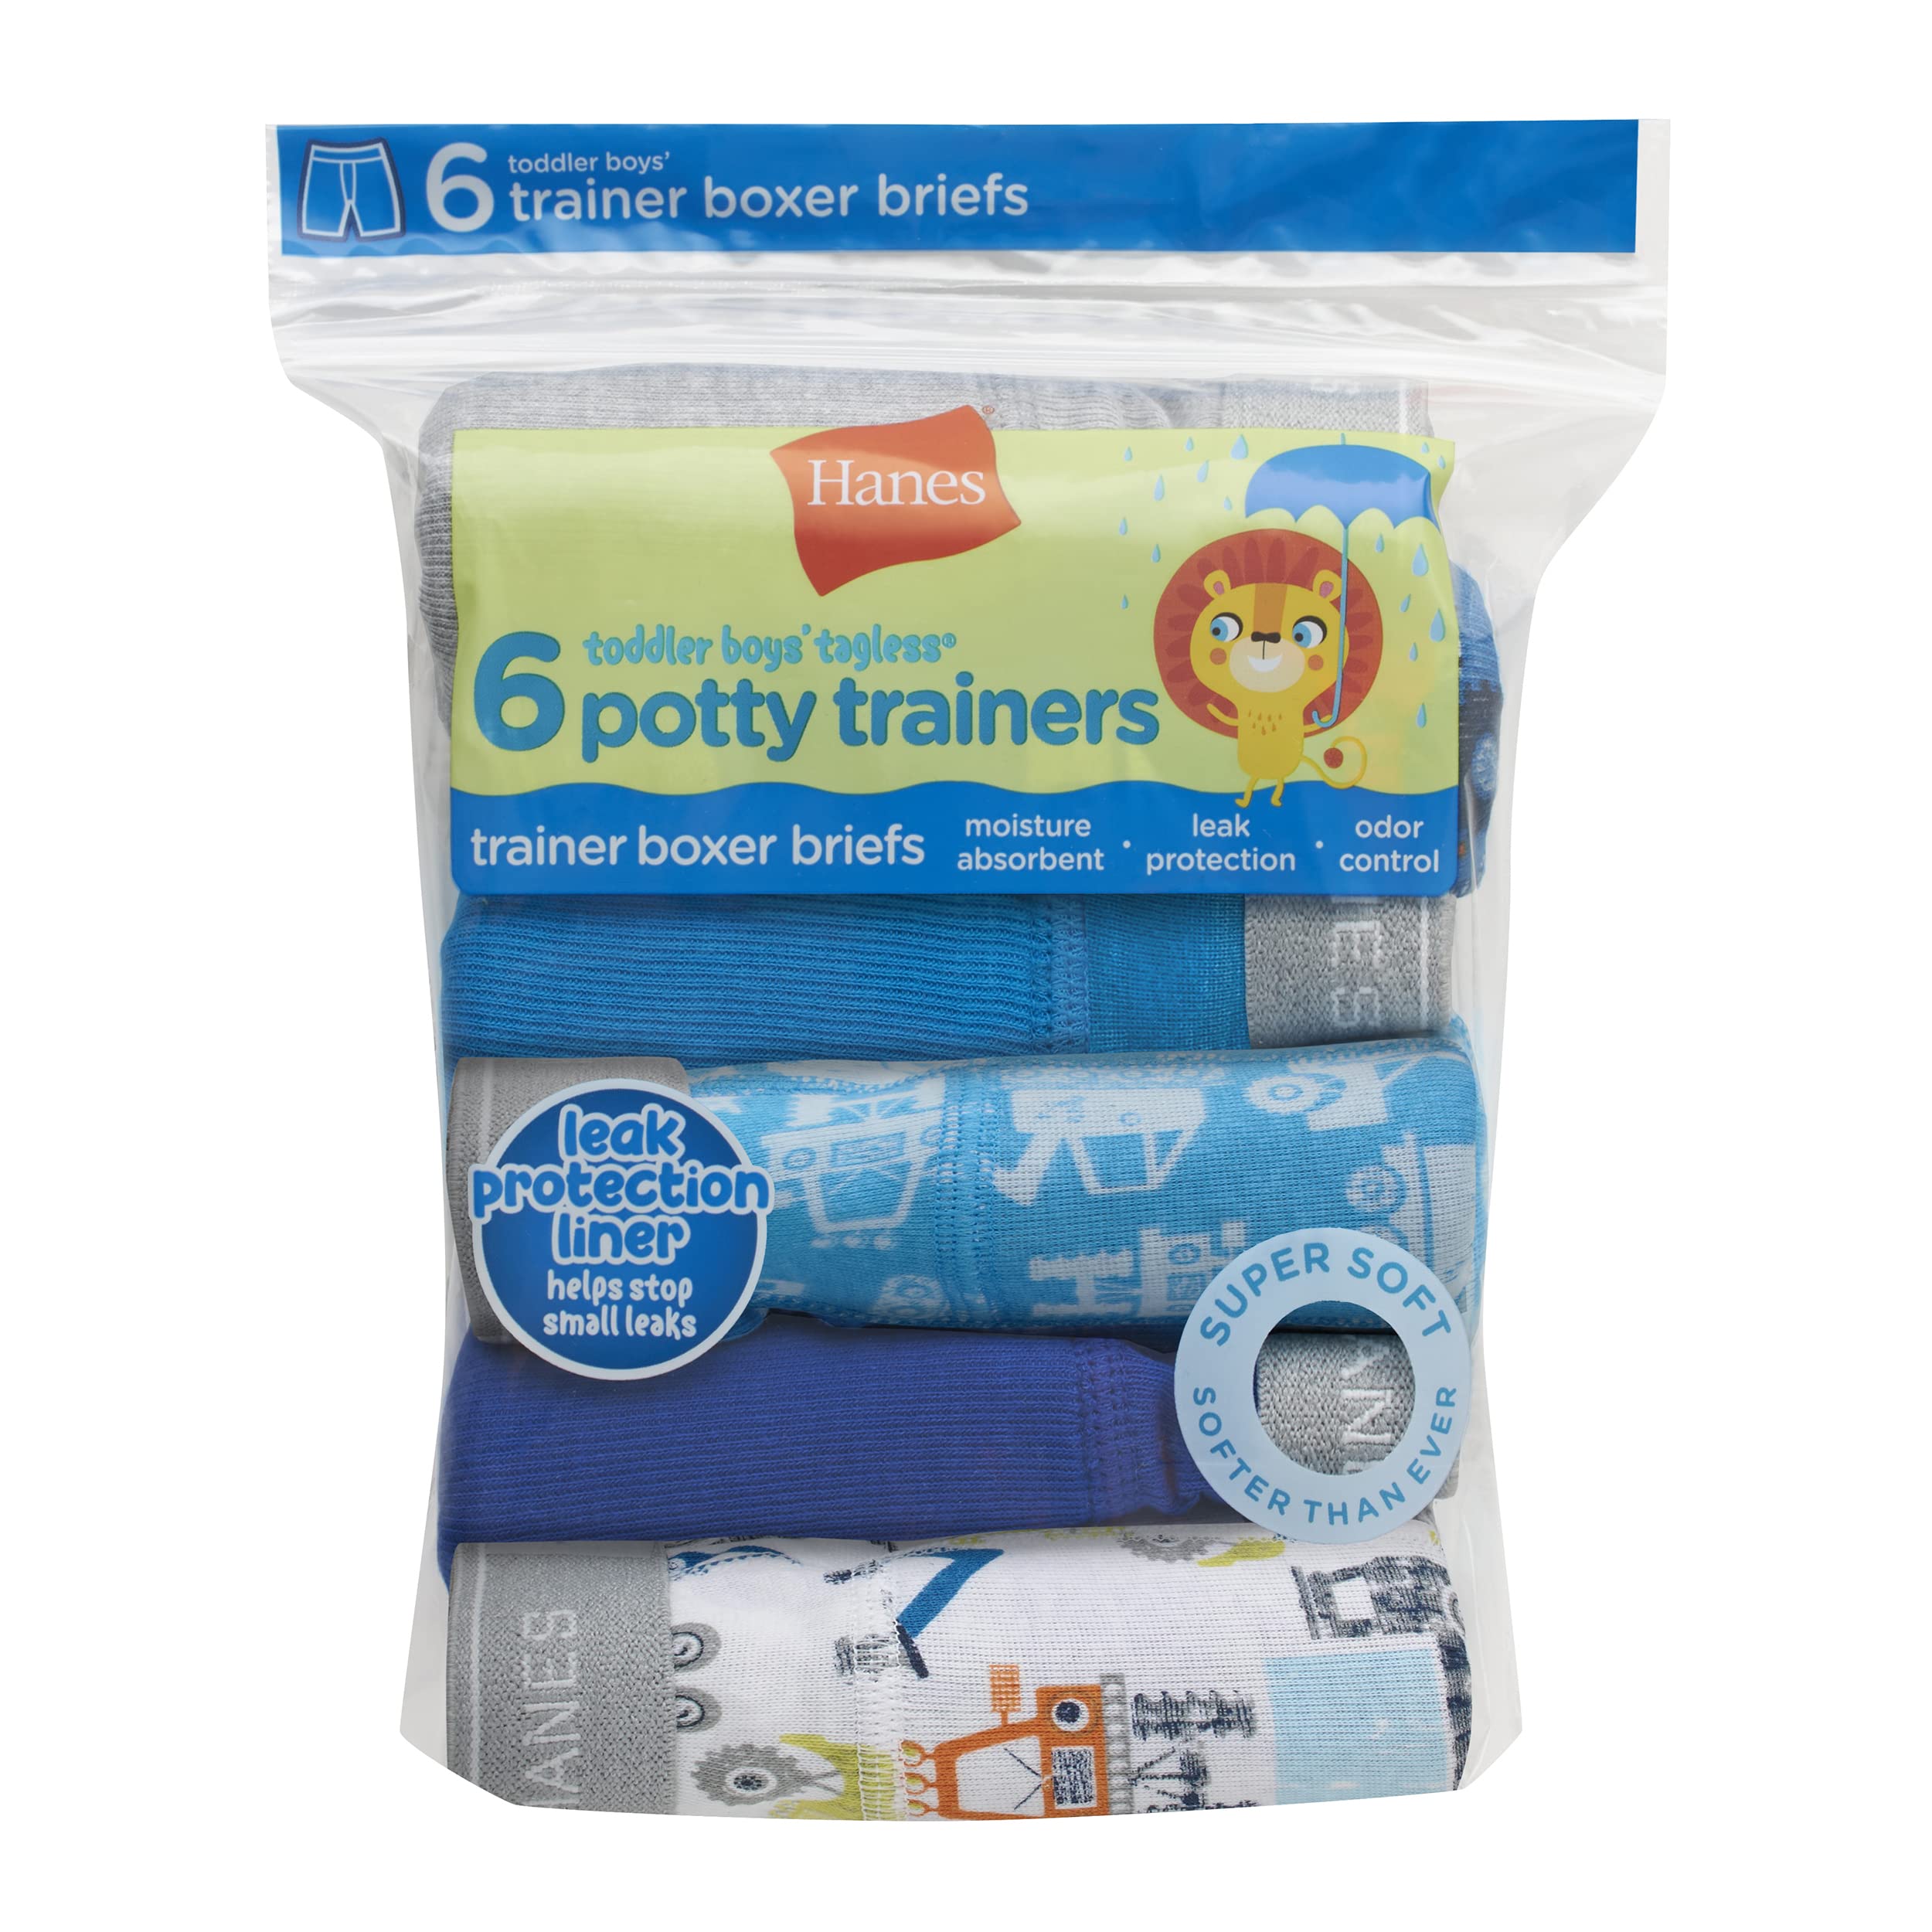 Hanes Toddler Boys' Potty Trainer Underwear, Boxer Briefs & Briefs Available, 6-Pack